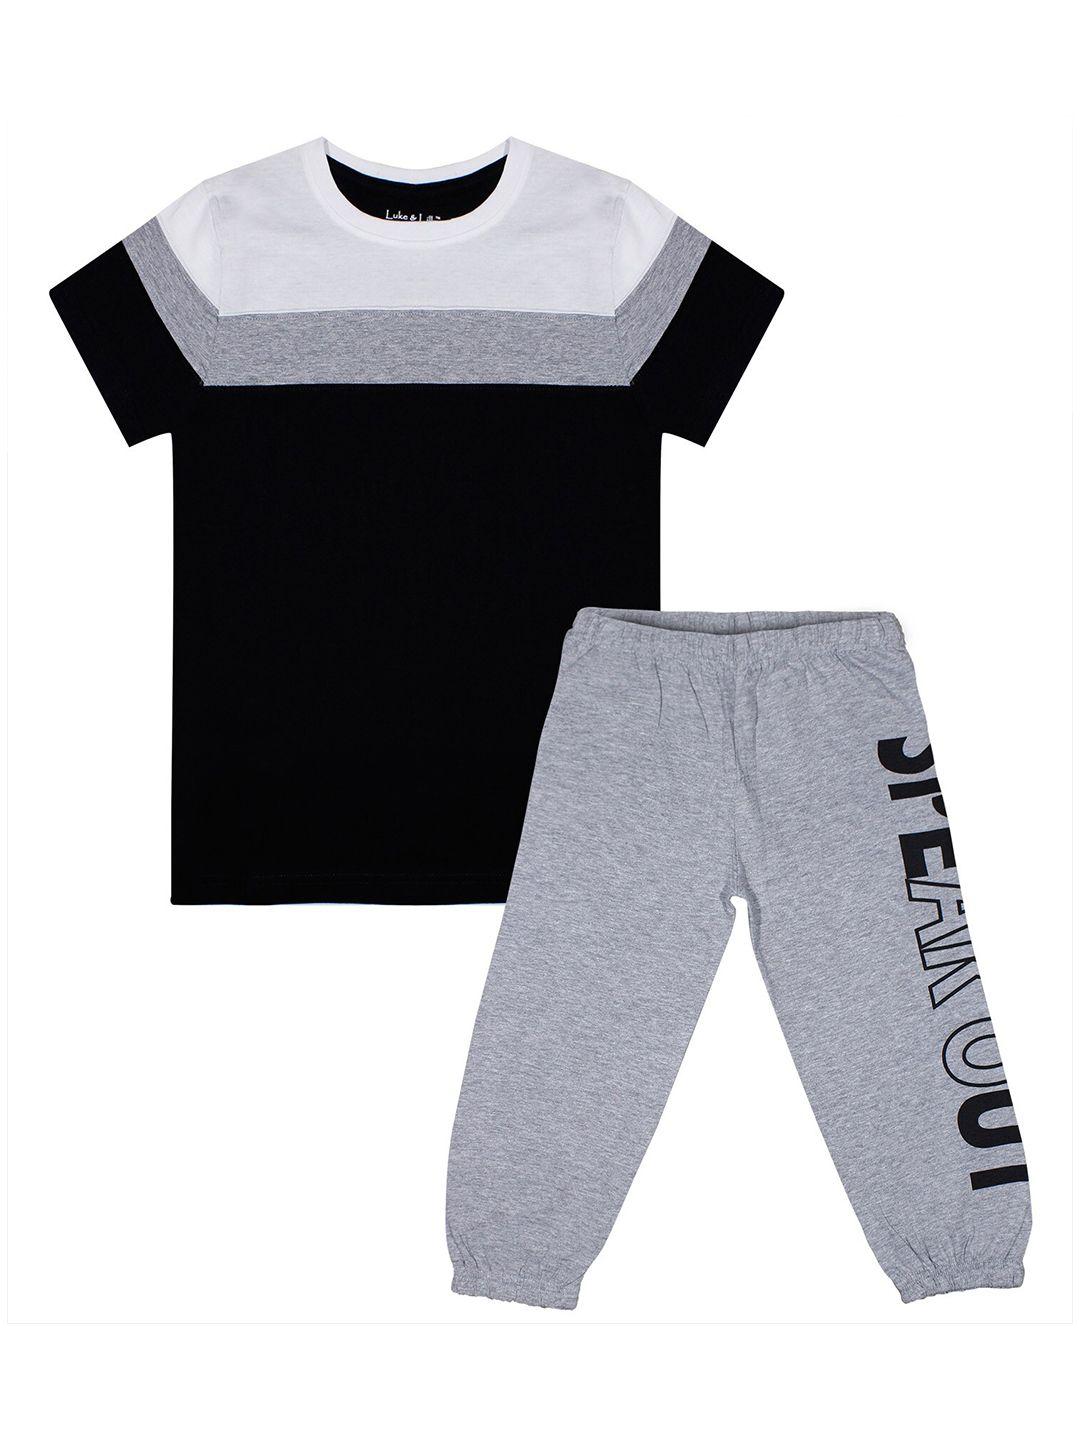 luke & lilly boys grey & black colourblocked t-shirt with pyjamas